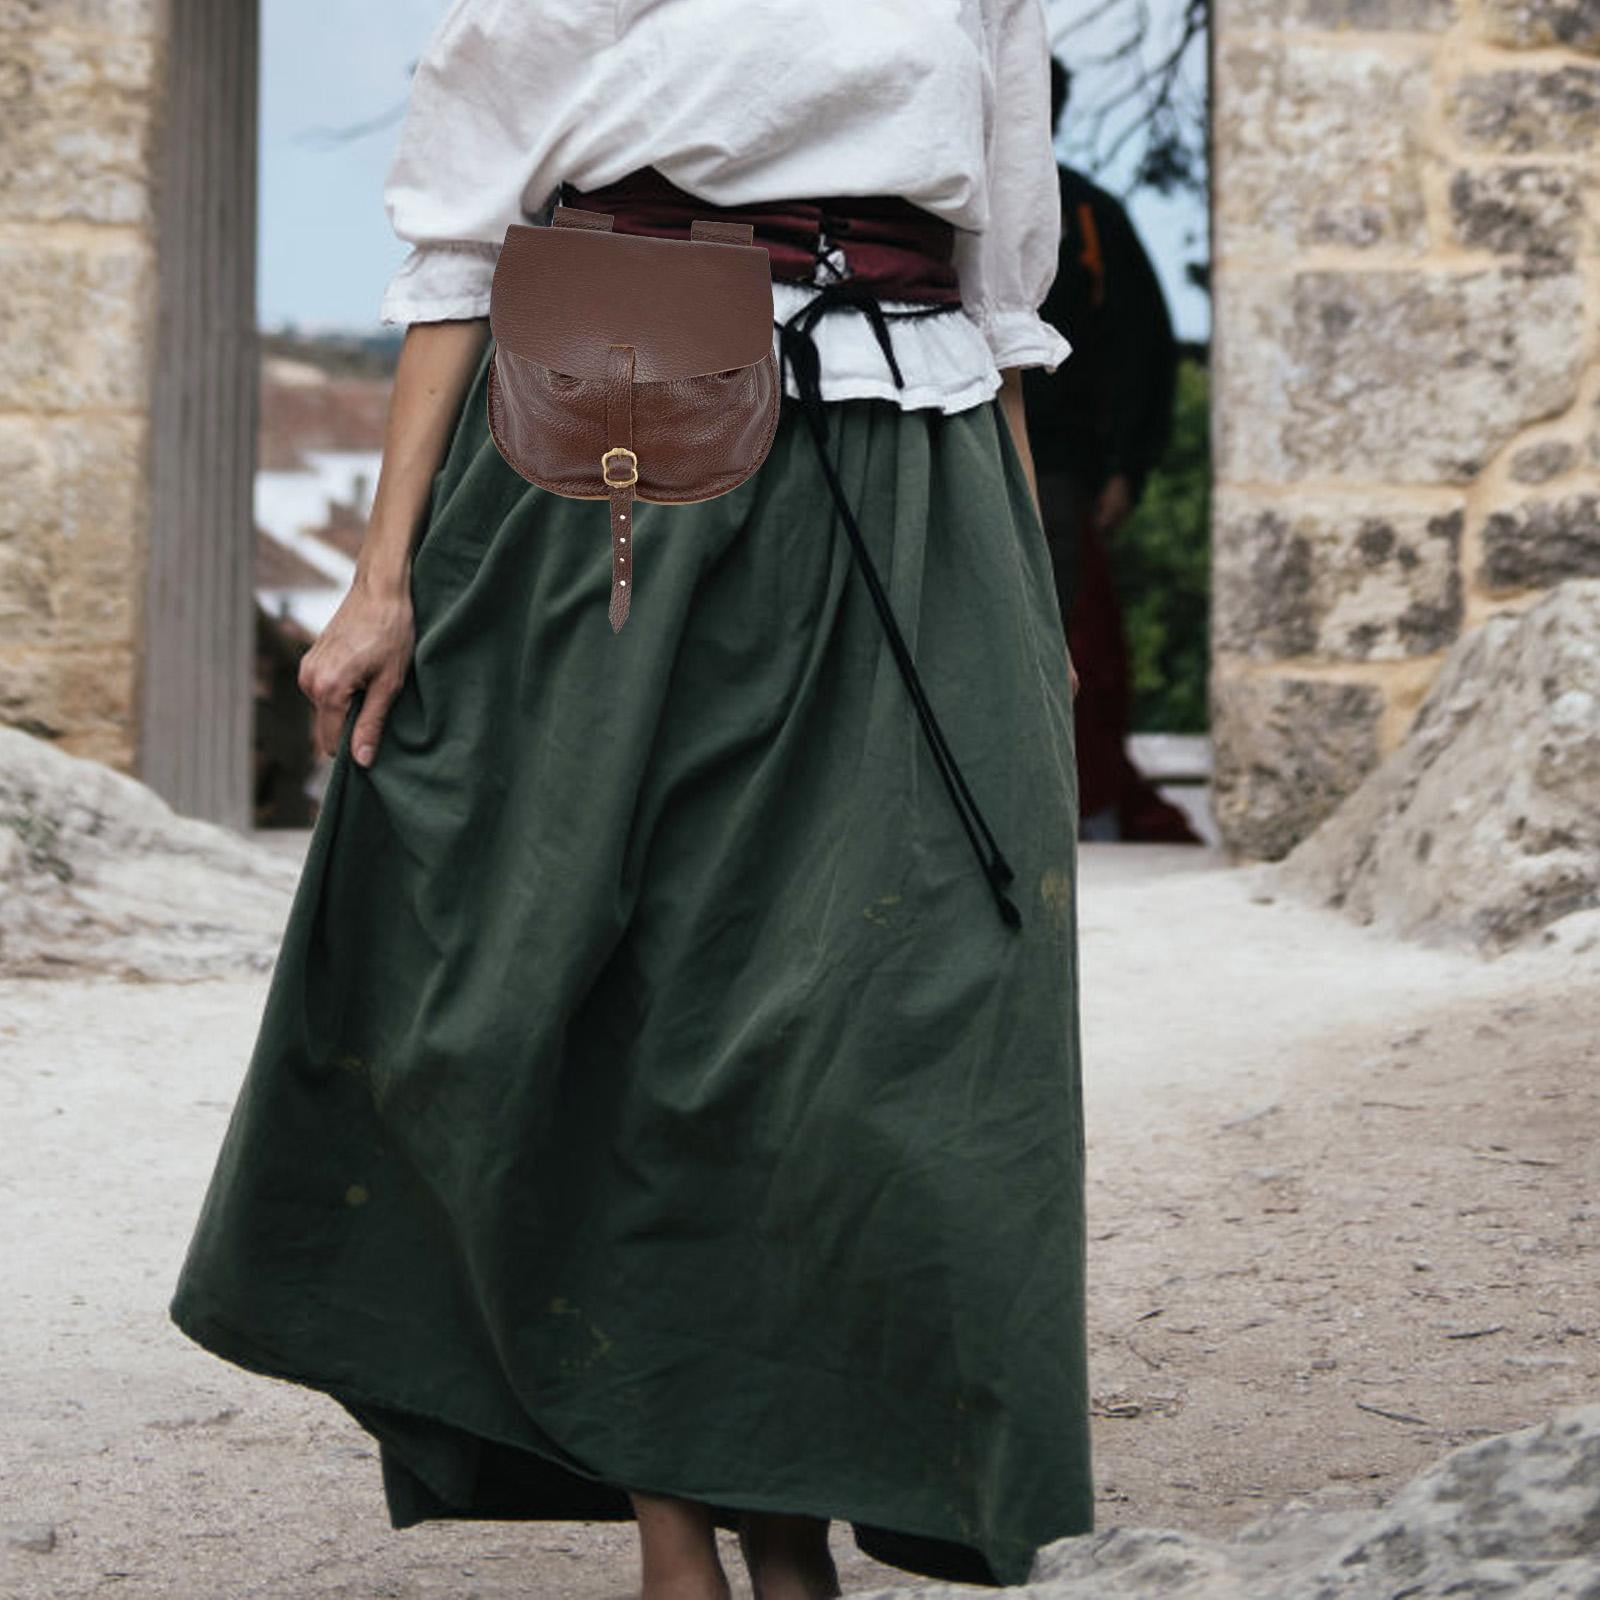 1pair Multicolor Medieval Pouch Bag With Belt Loop Retro Waist Bag